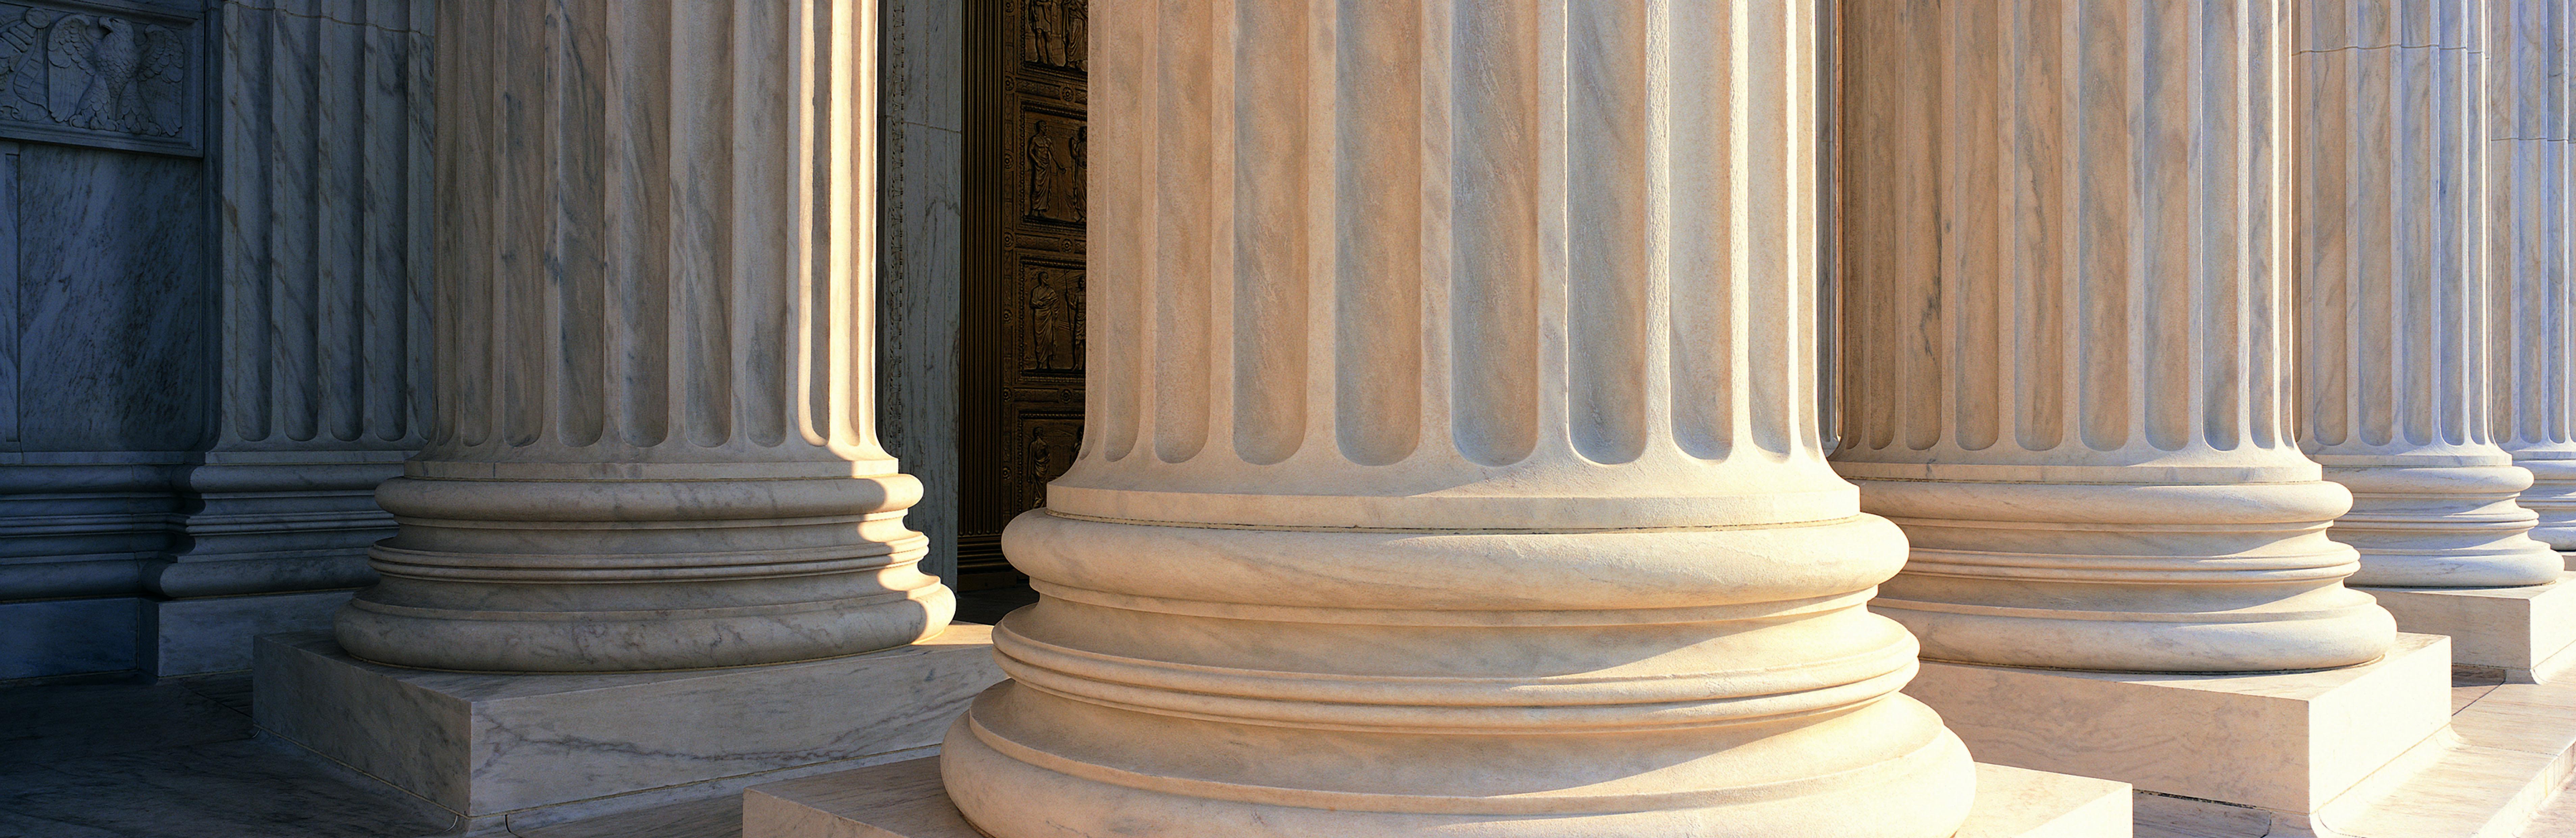 Detail of columns at the US Supreme Court, Washington DC